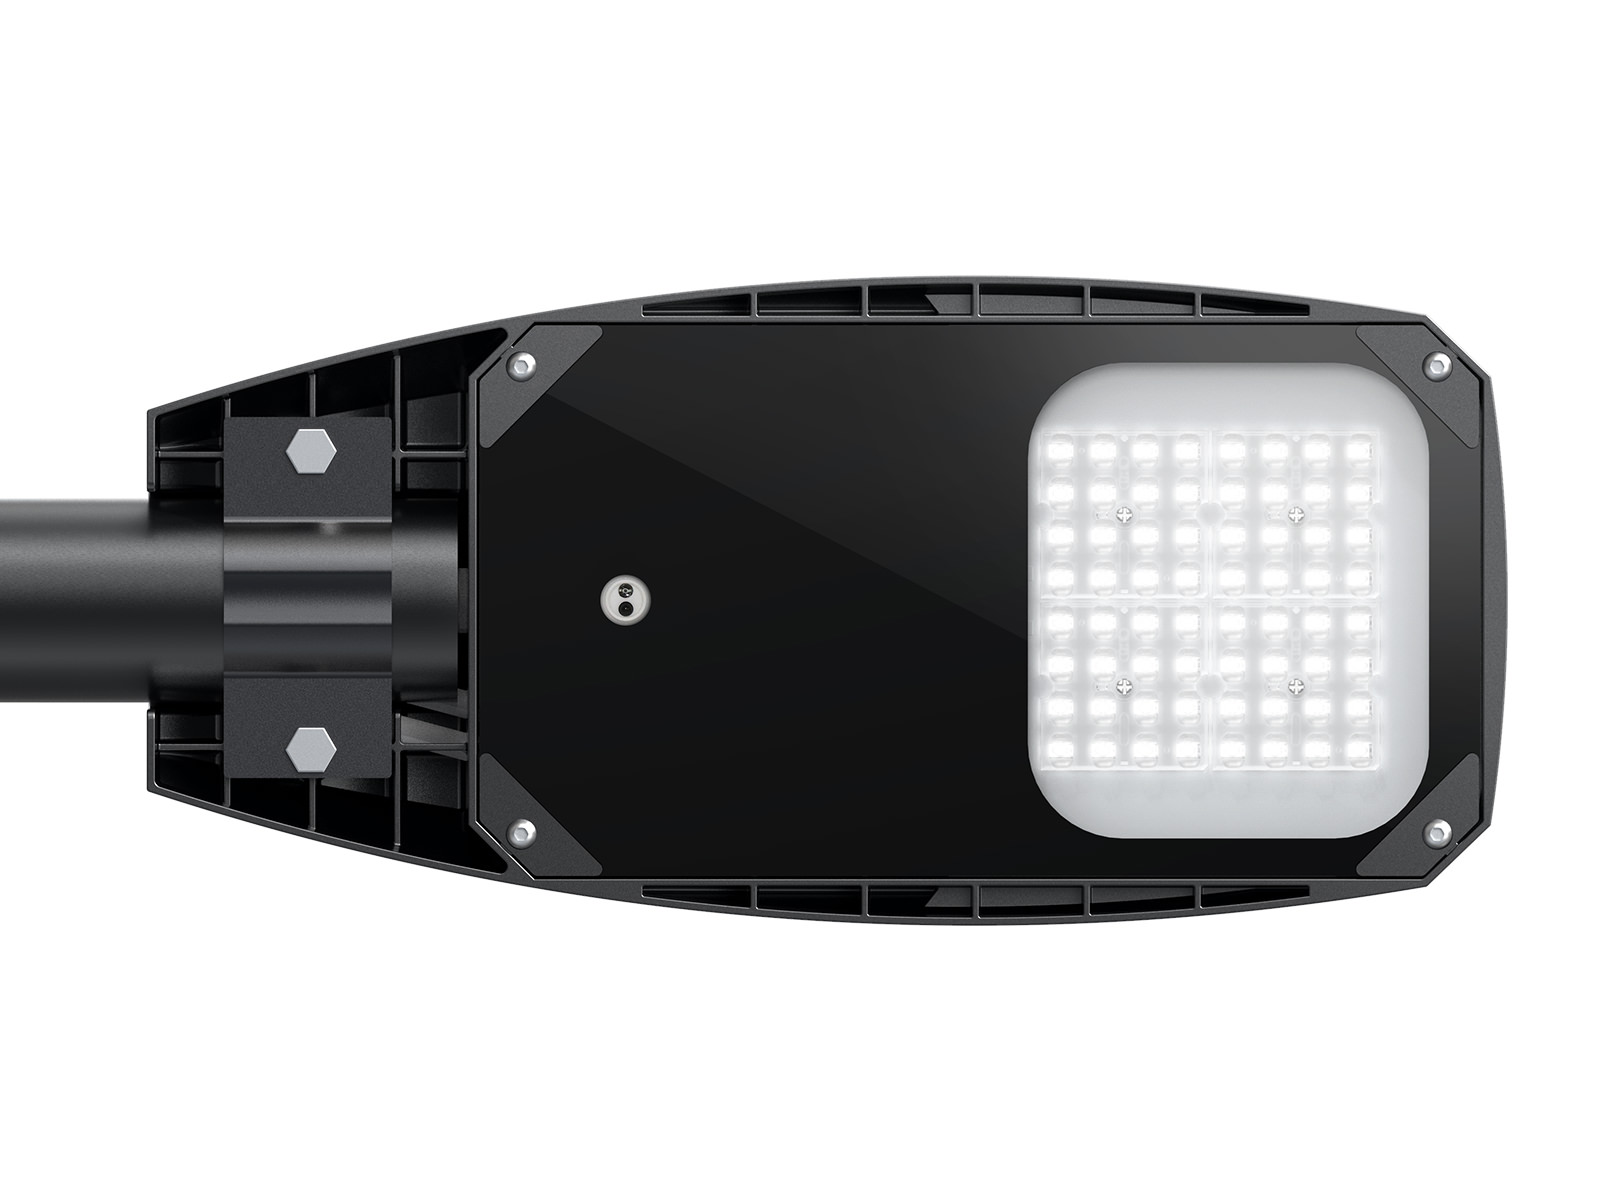 ST46 Cost effective Street Light with daylight sensor microwave sensor